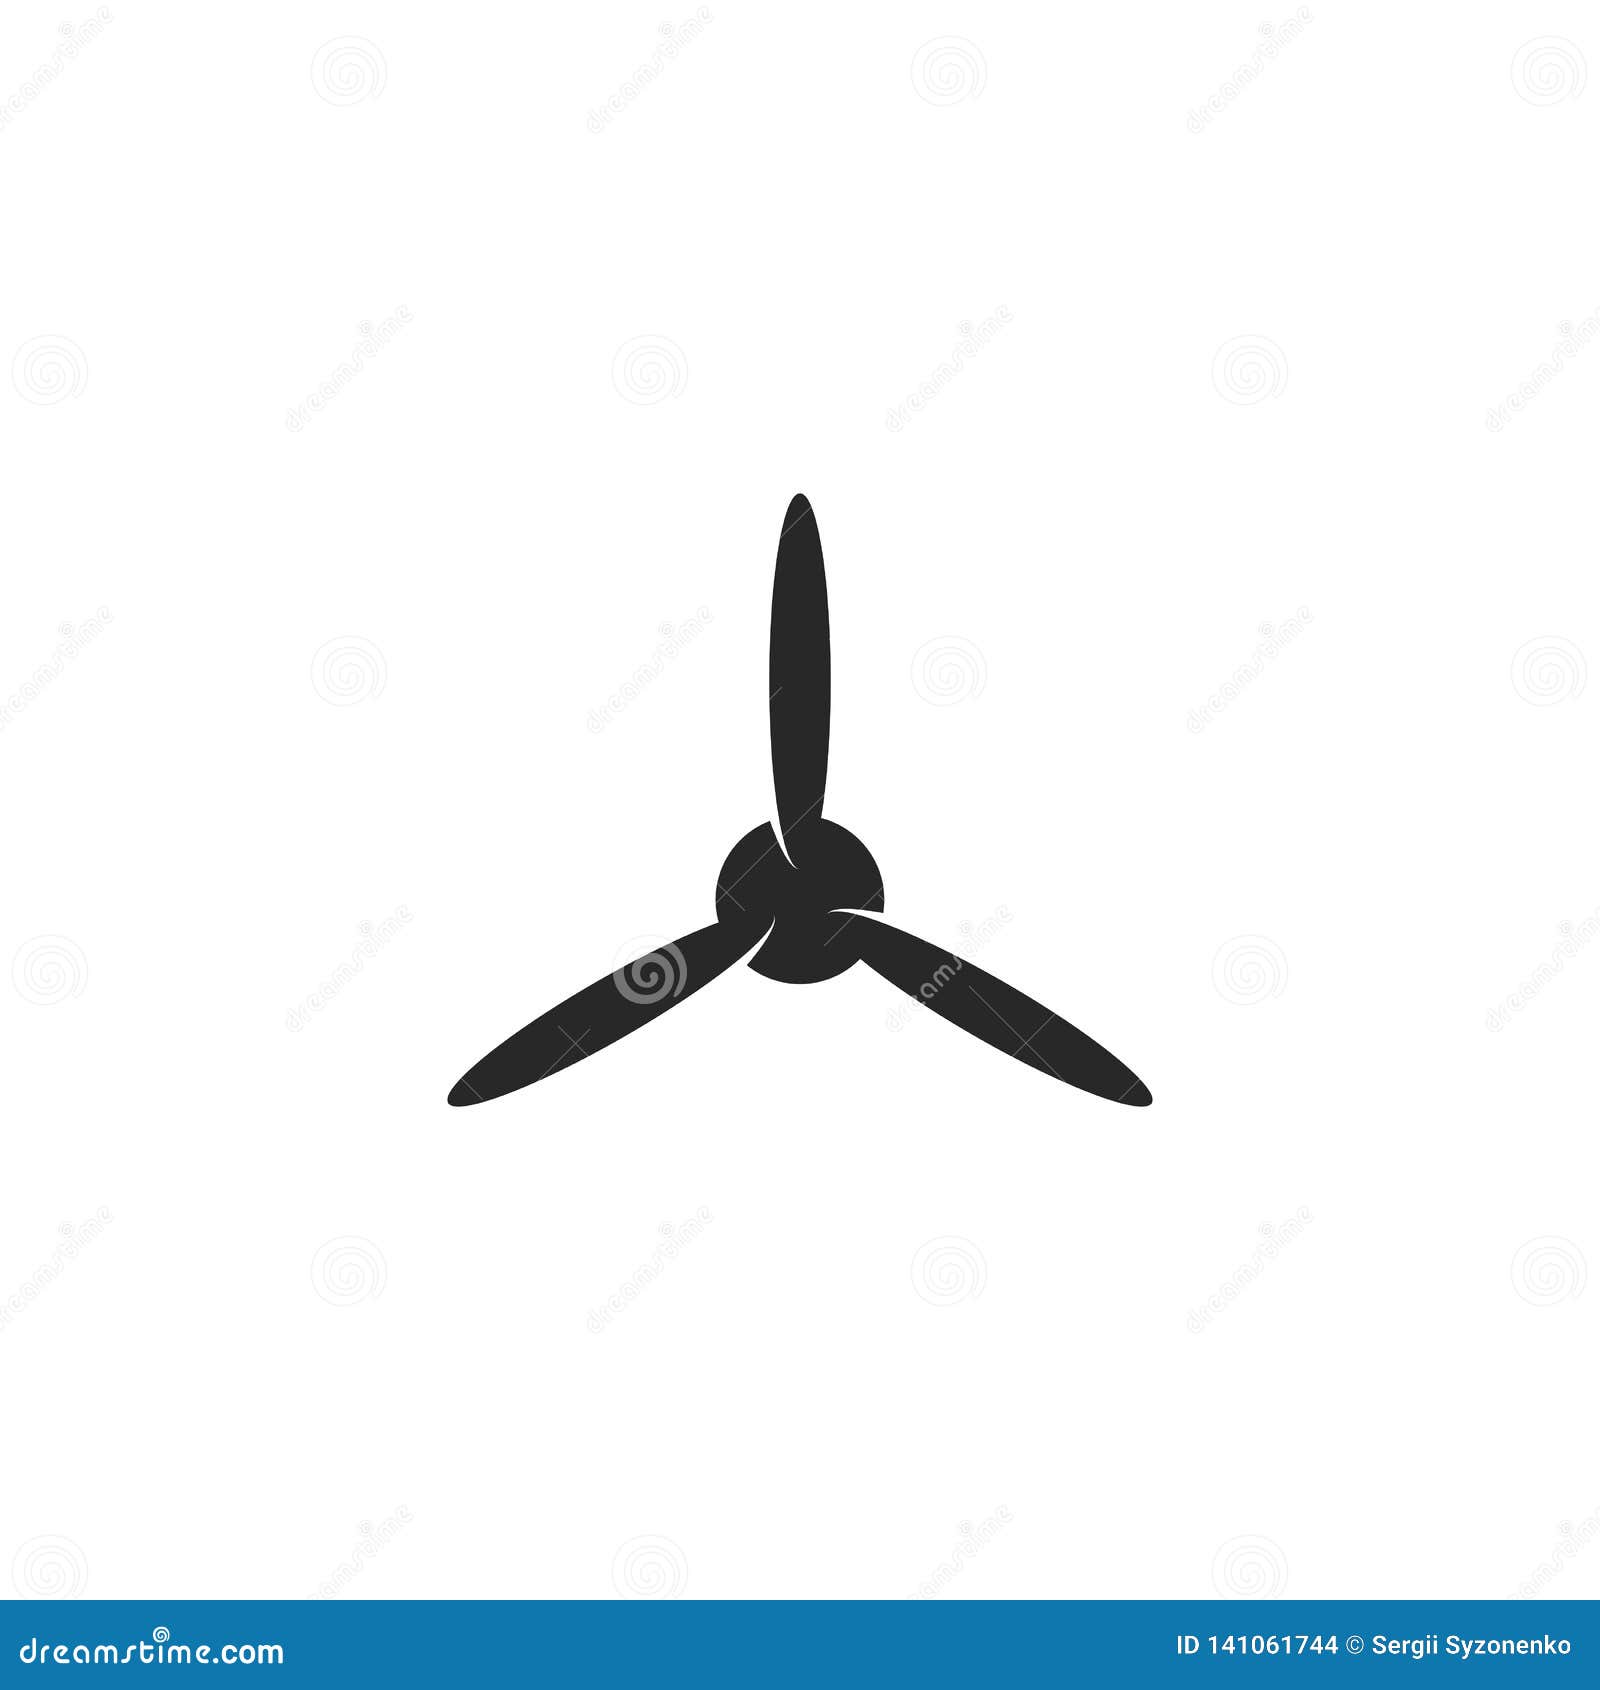 blades propeller logo of airplane on white background. wind energy icon